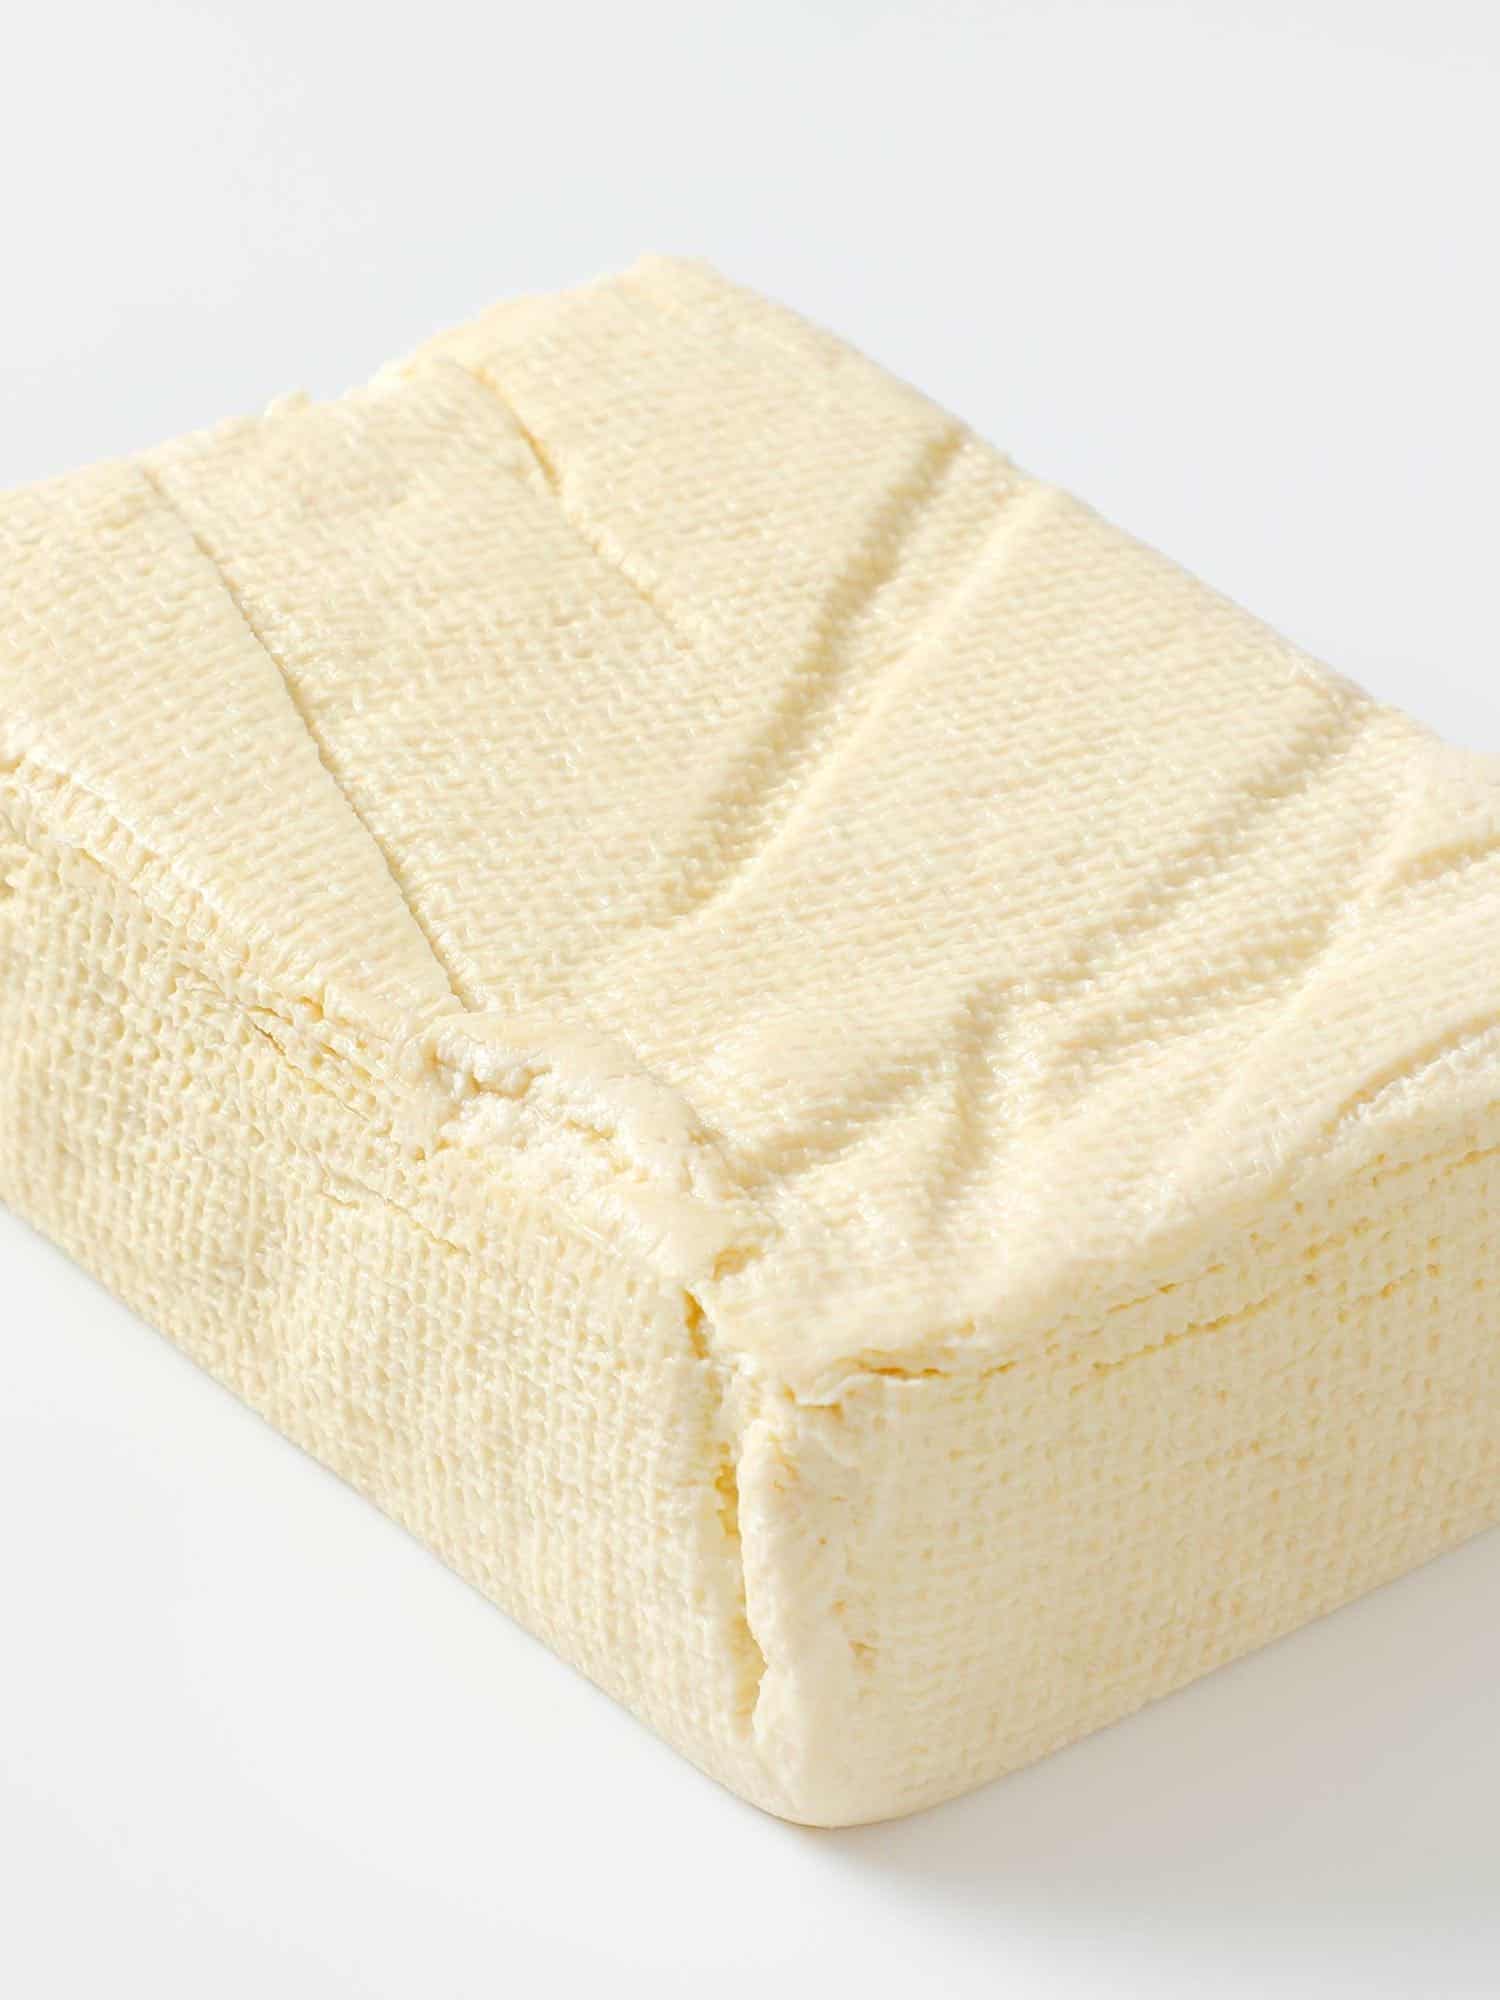 plain raw extra firm tofu block